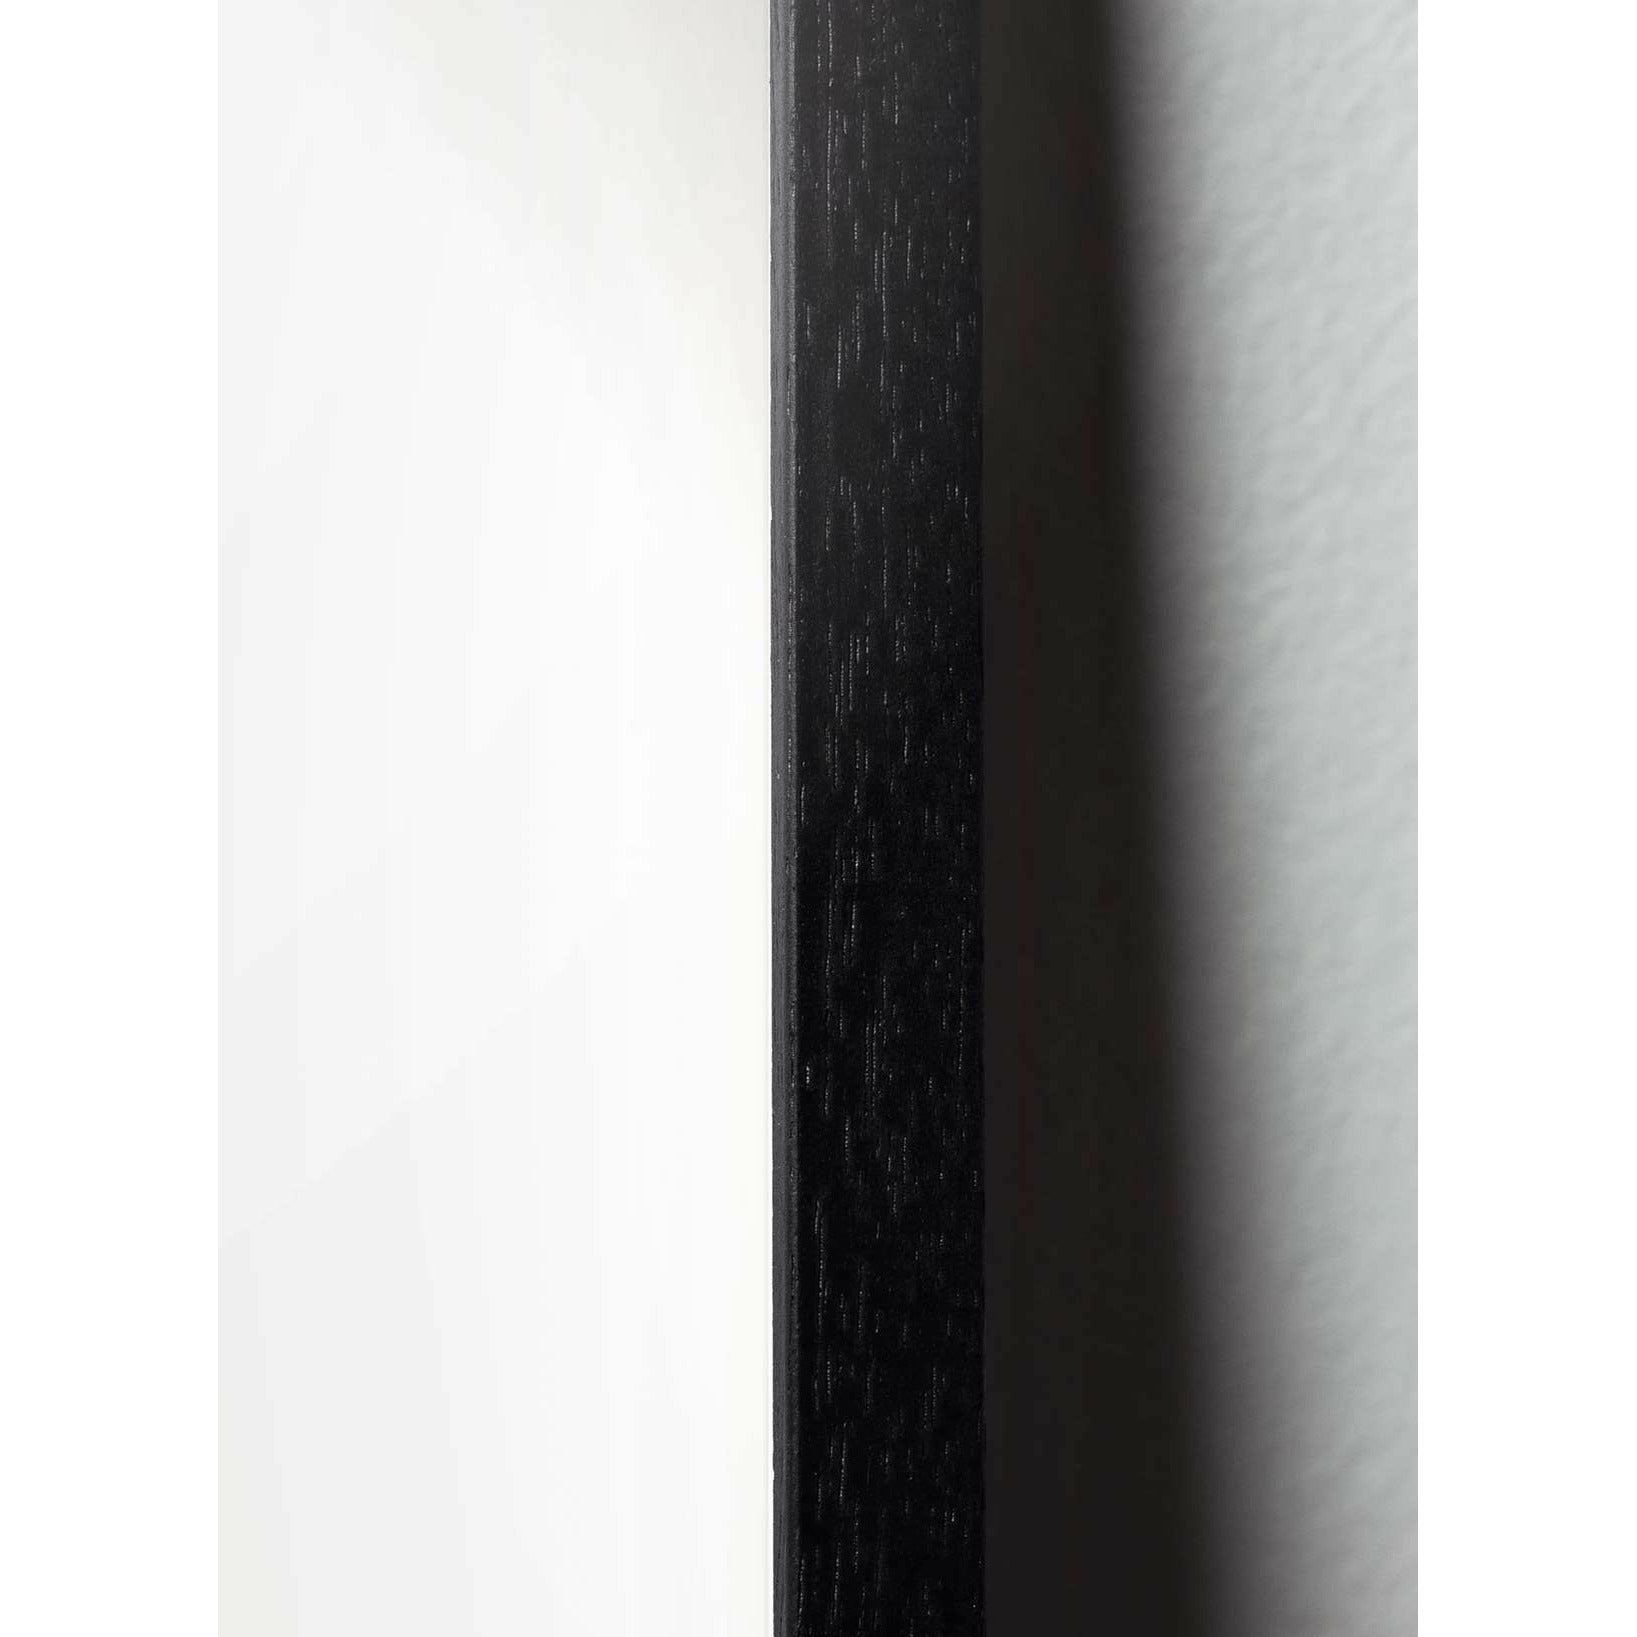 Brainchild Nallebjörnslinje affisch, ram i svart målat trä 50x70 cm, vit bakgrund